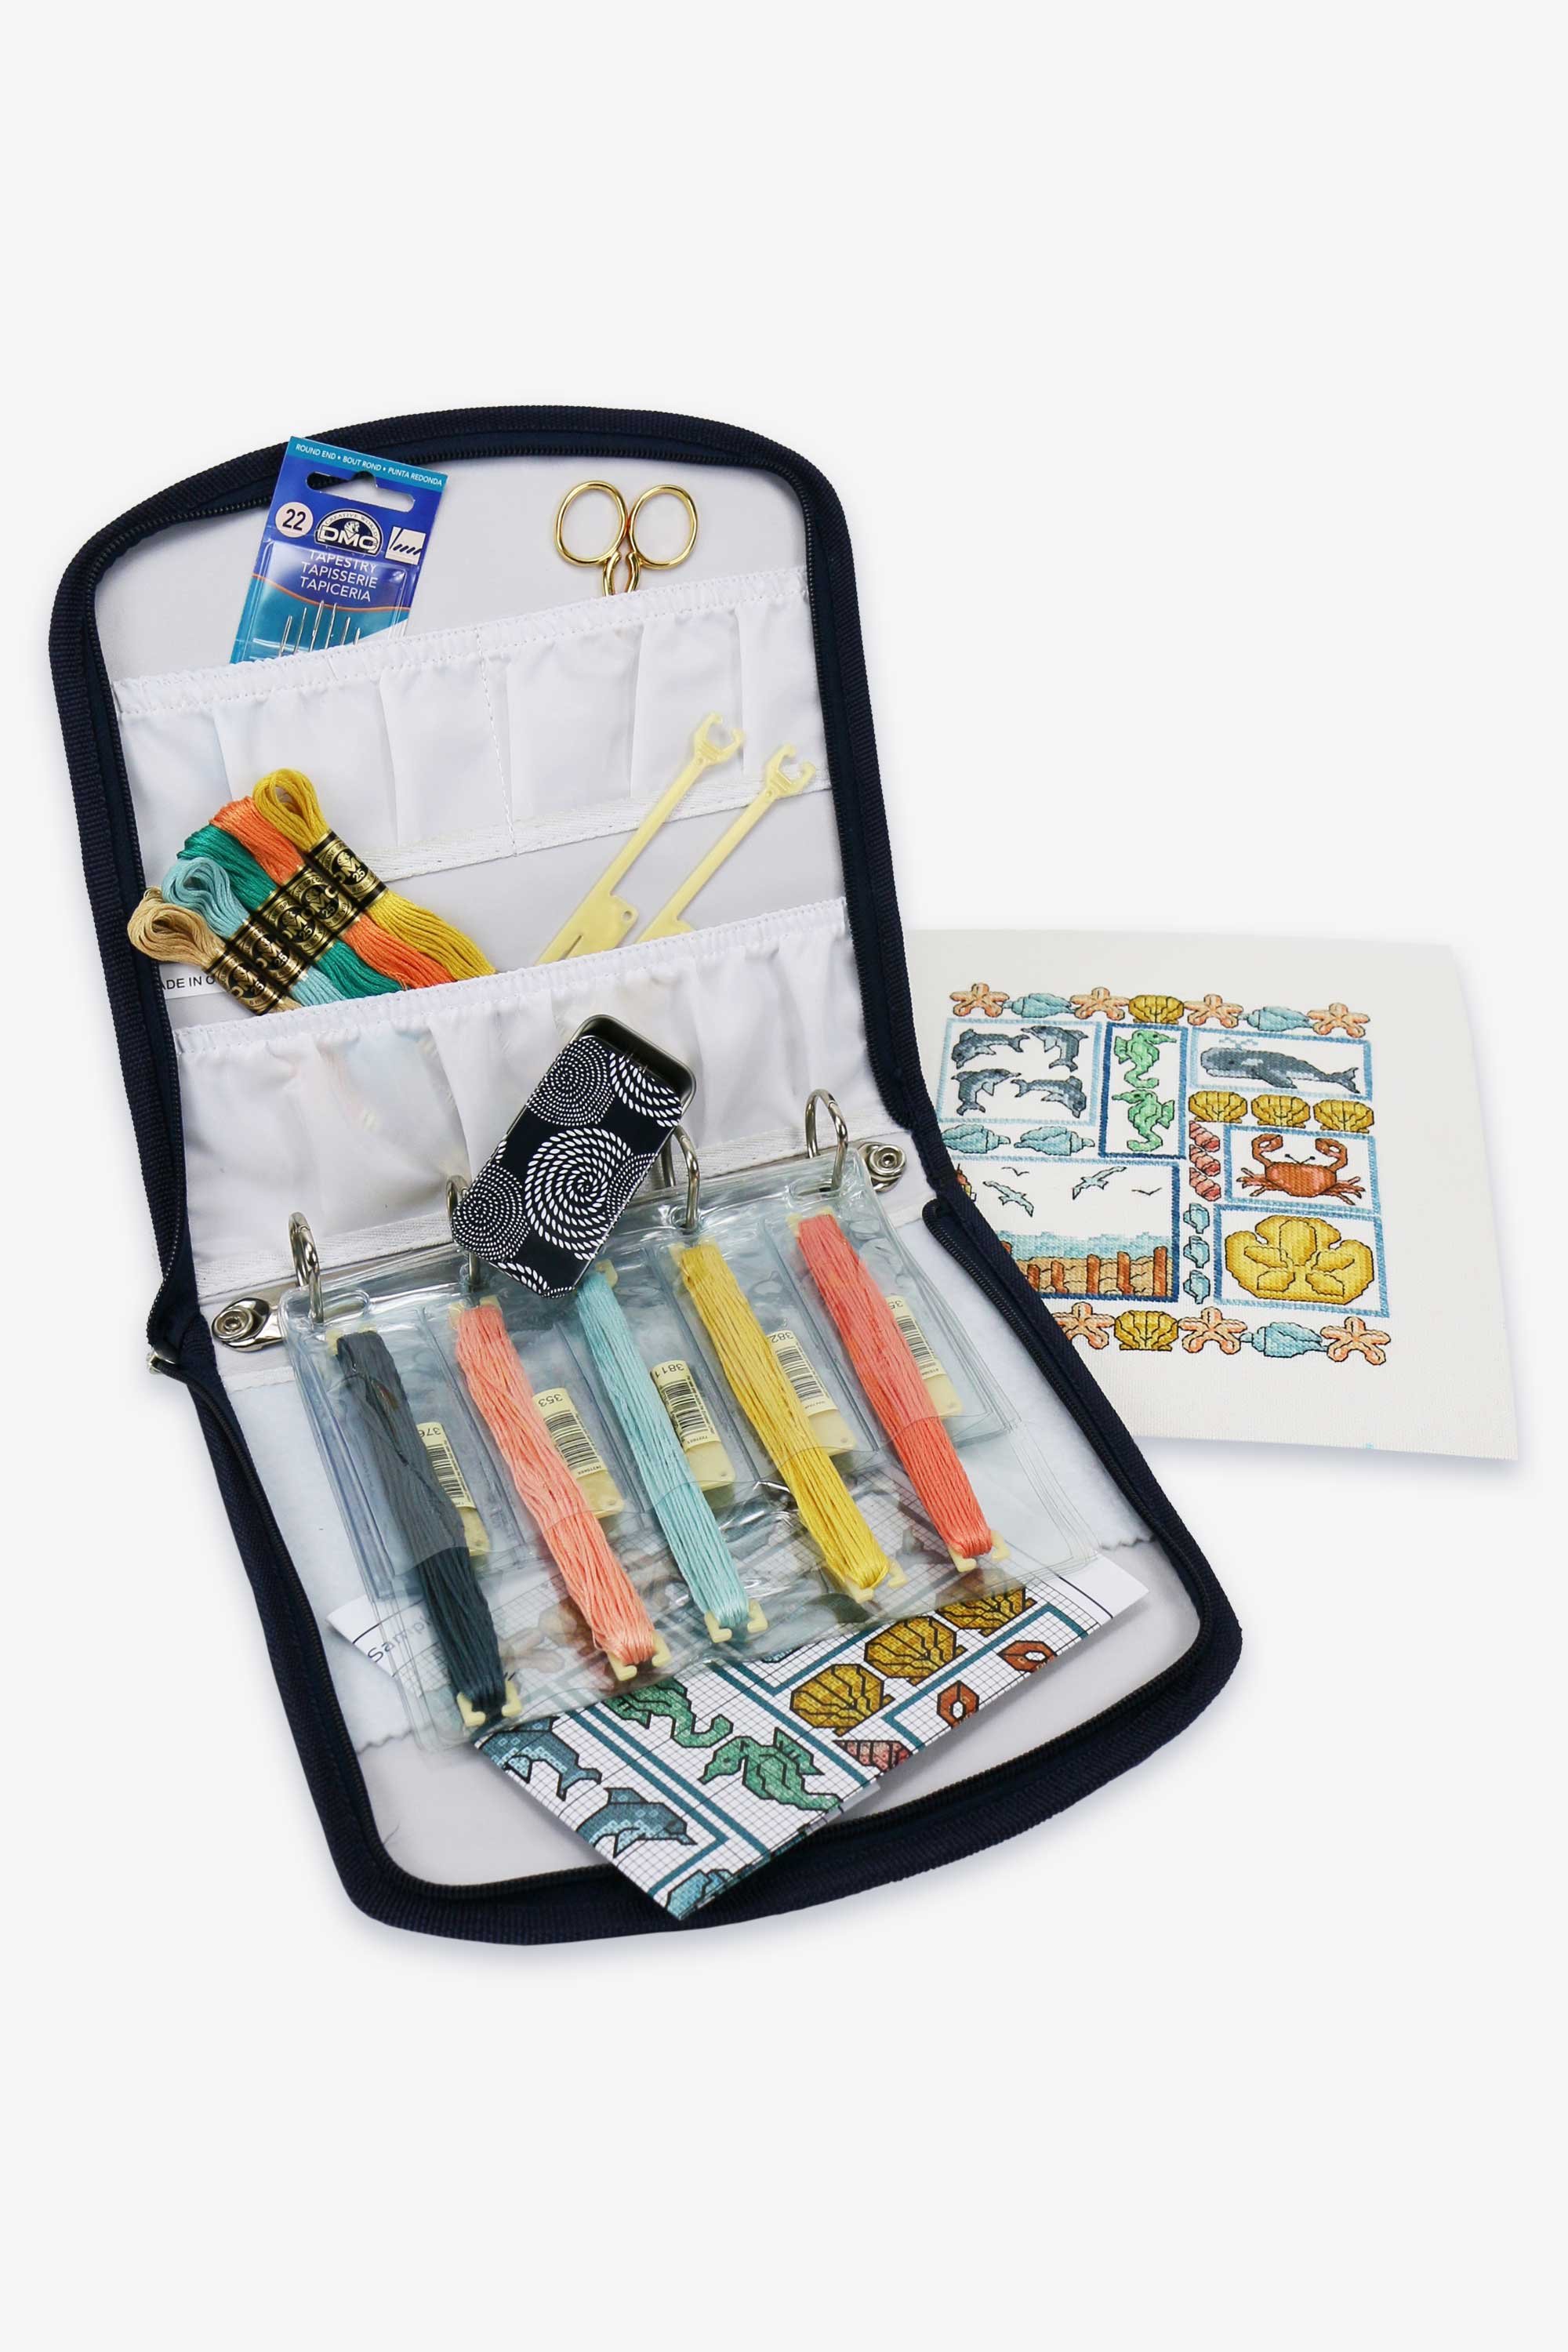 Stitchbow Mini Travel Bag Bundle